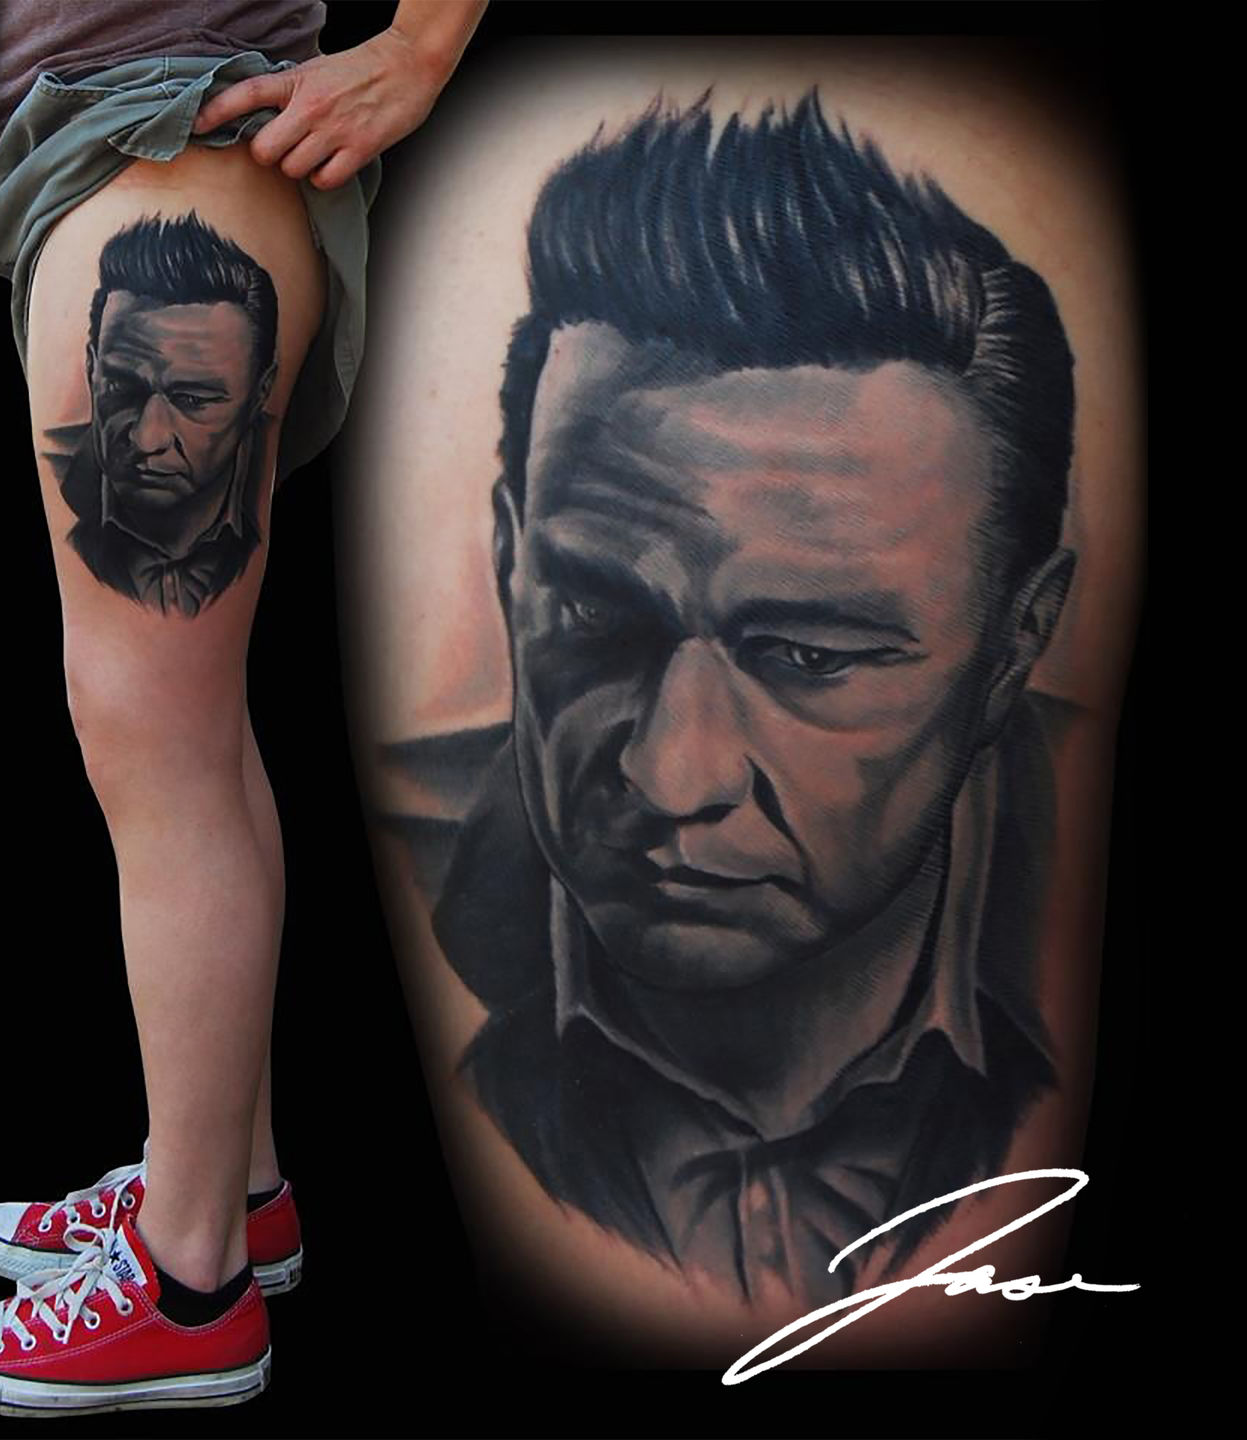 Johnny Cash #tattoo. My interpretation based off the refer… | Flickr